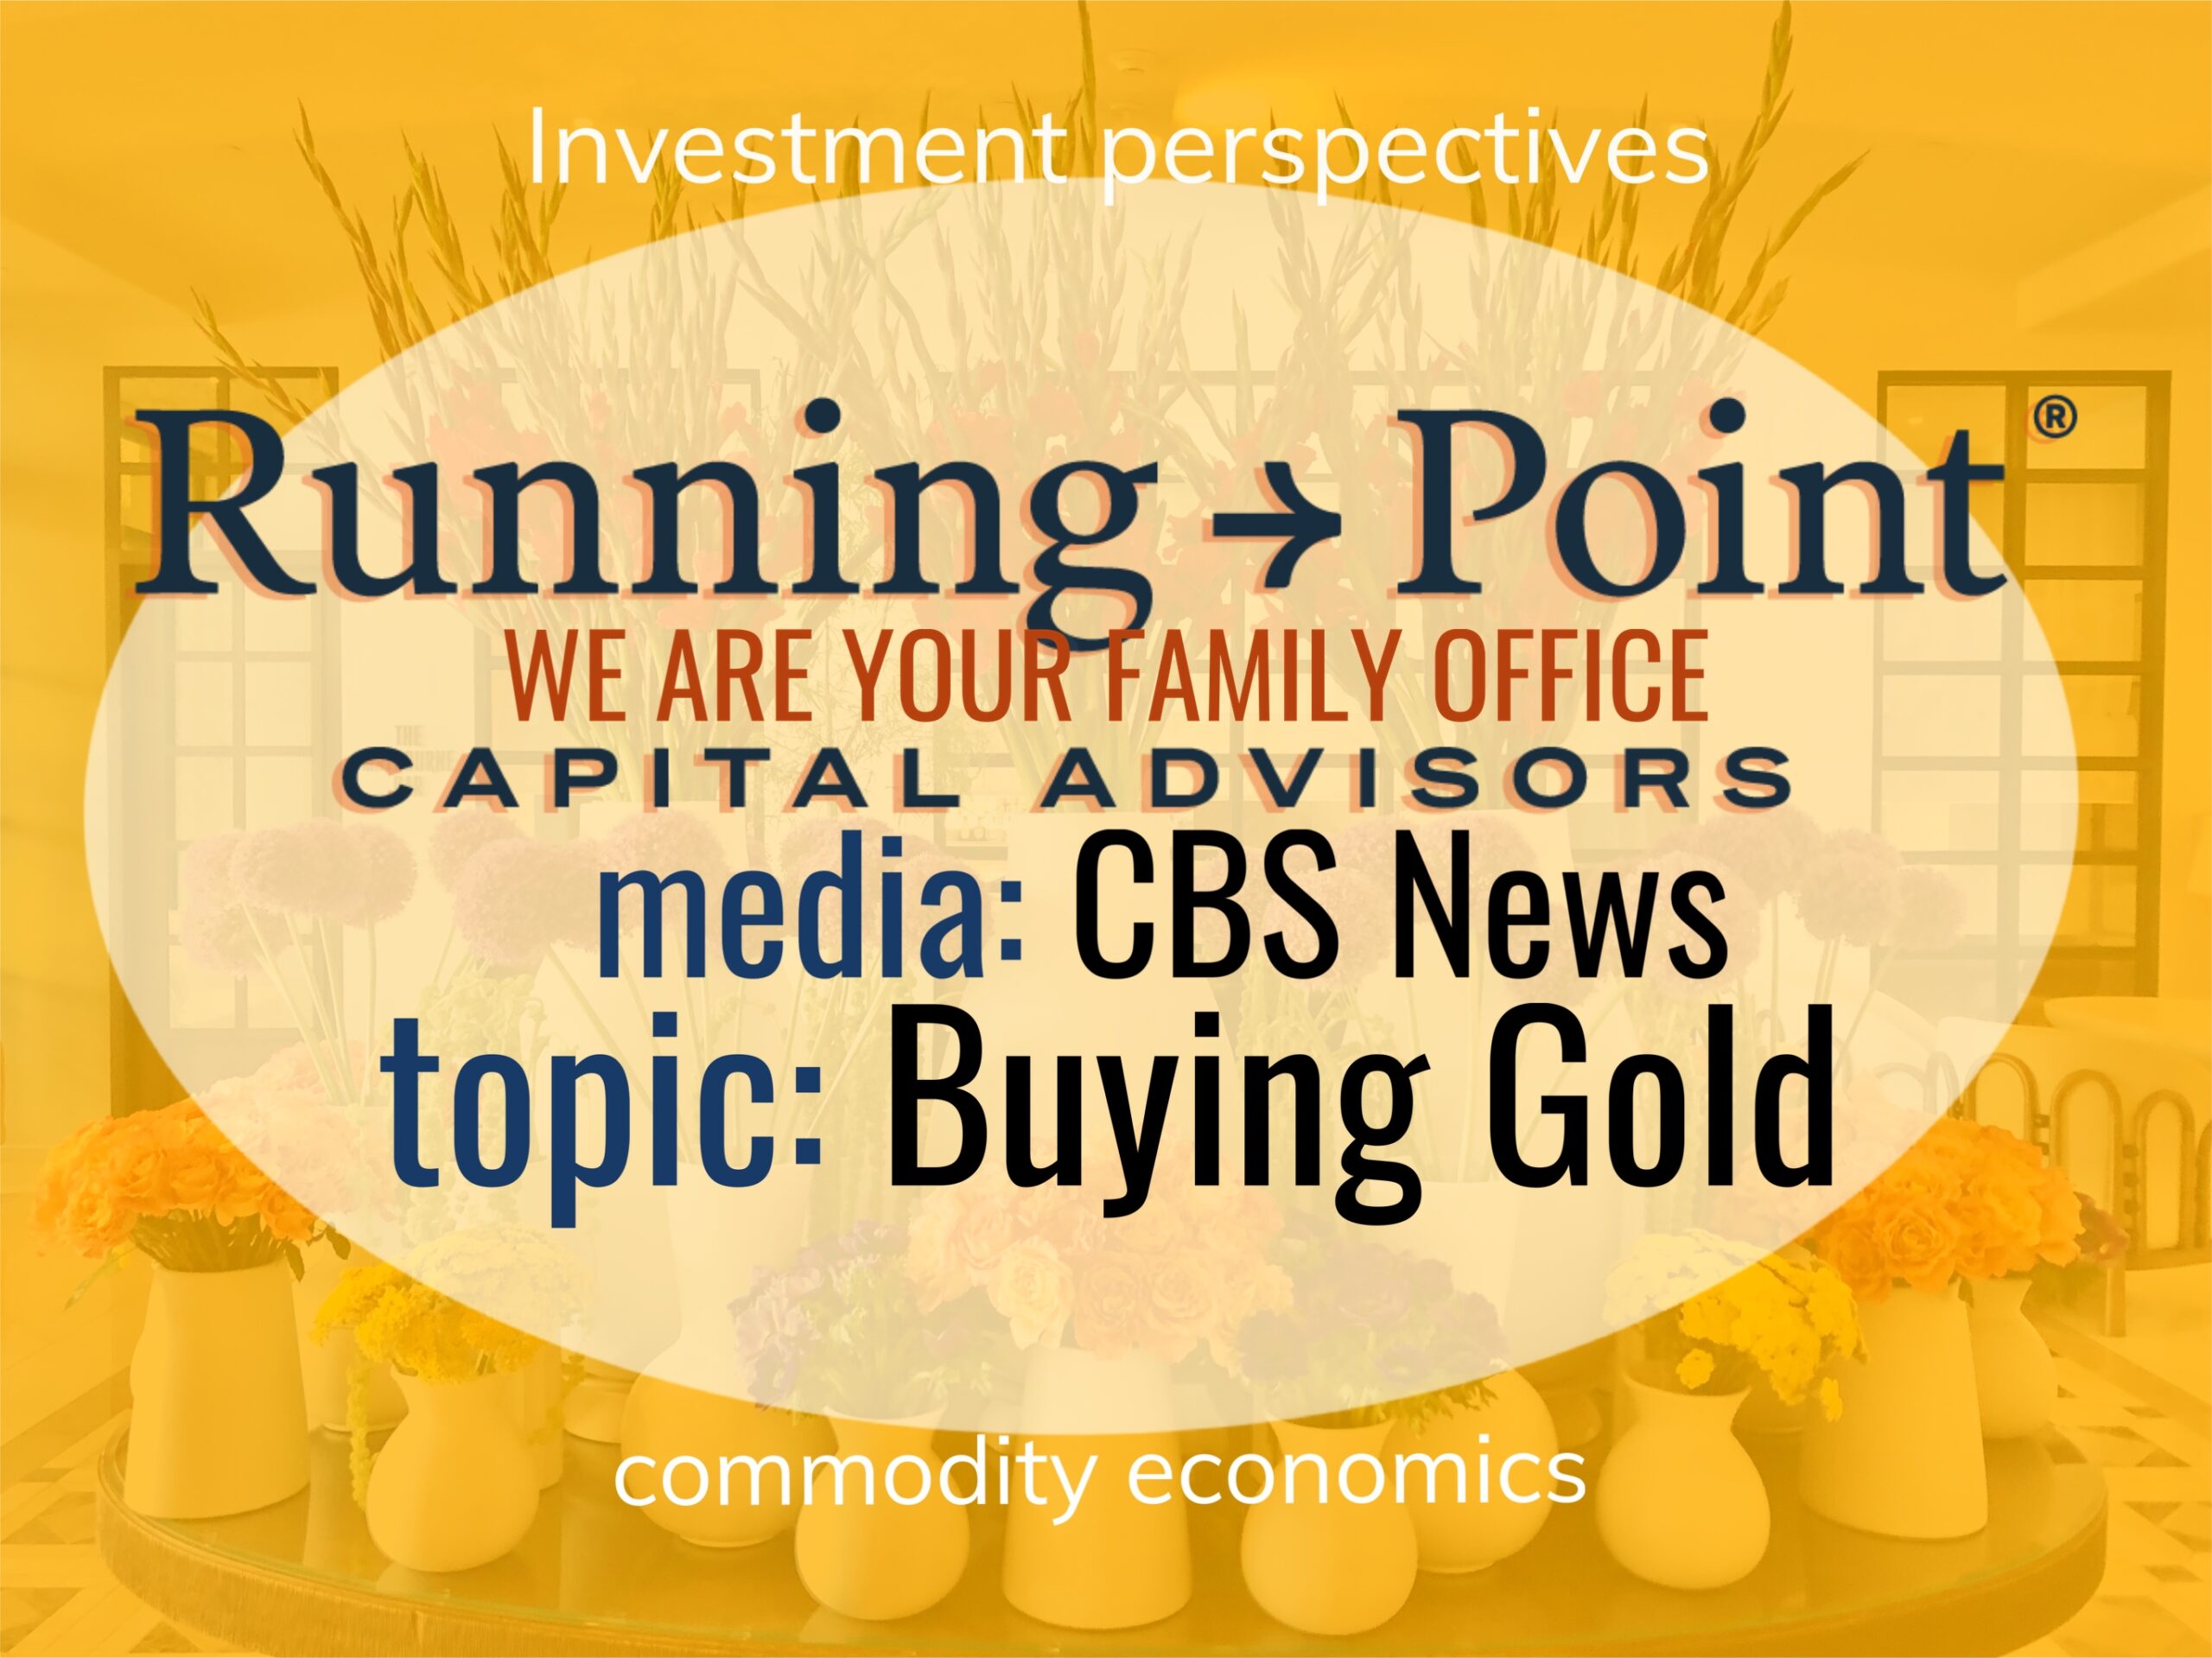 CBS News: Buying Gold